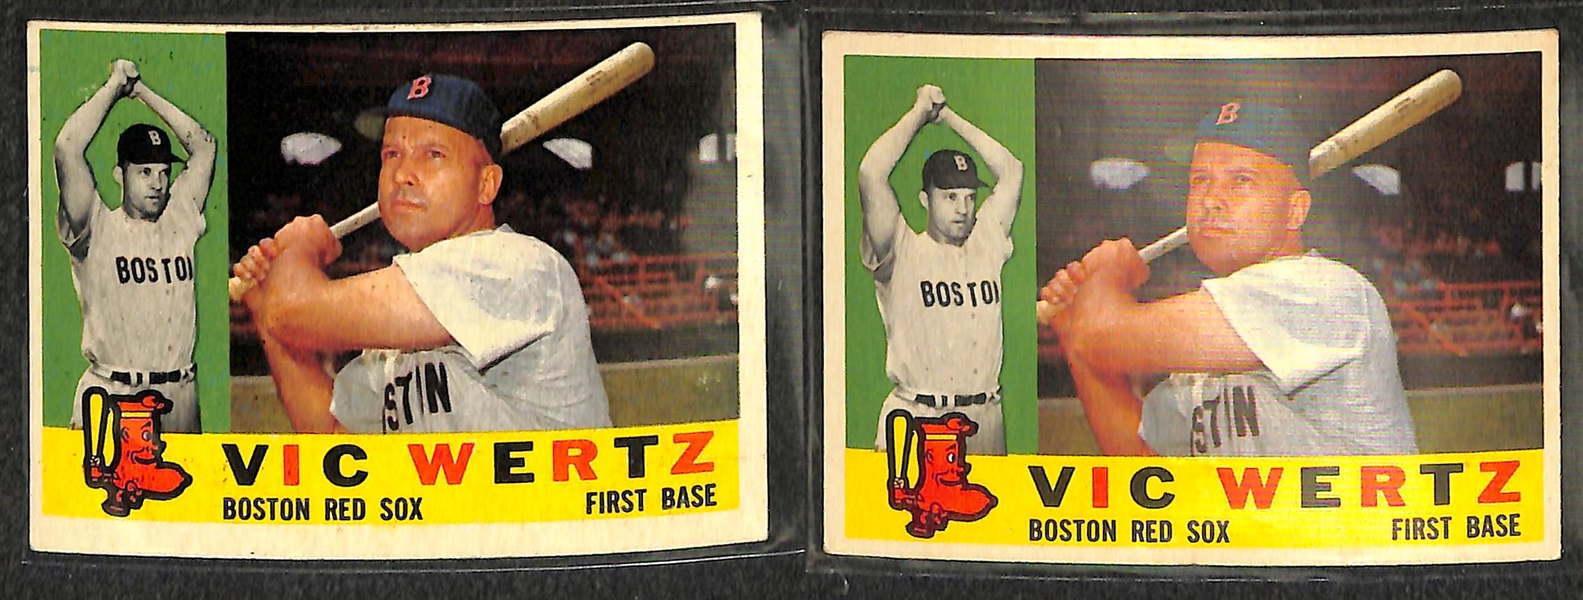 Lot of 150 Topps 1960 Baseball Cards w. Early Wynn